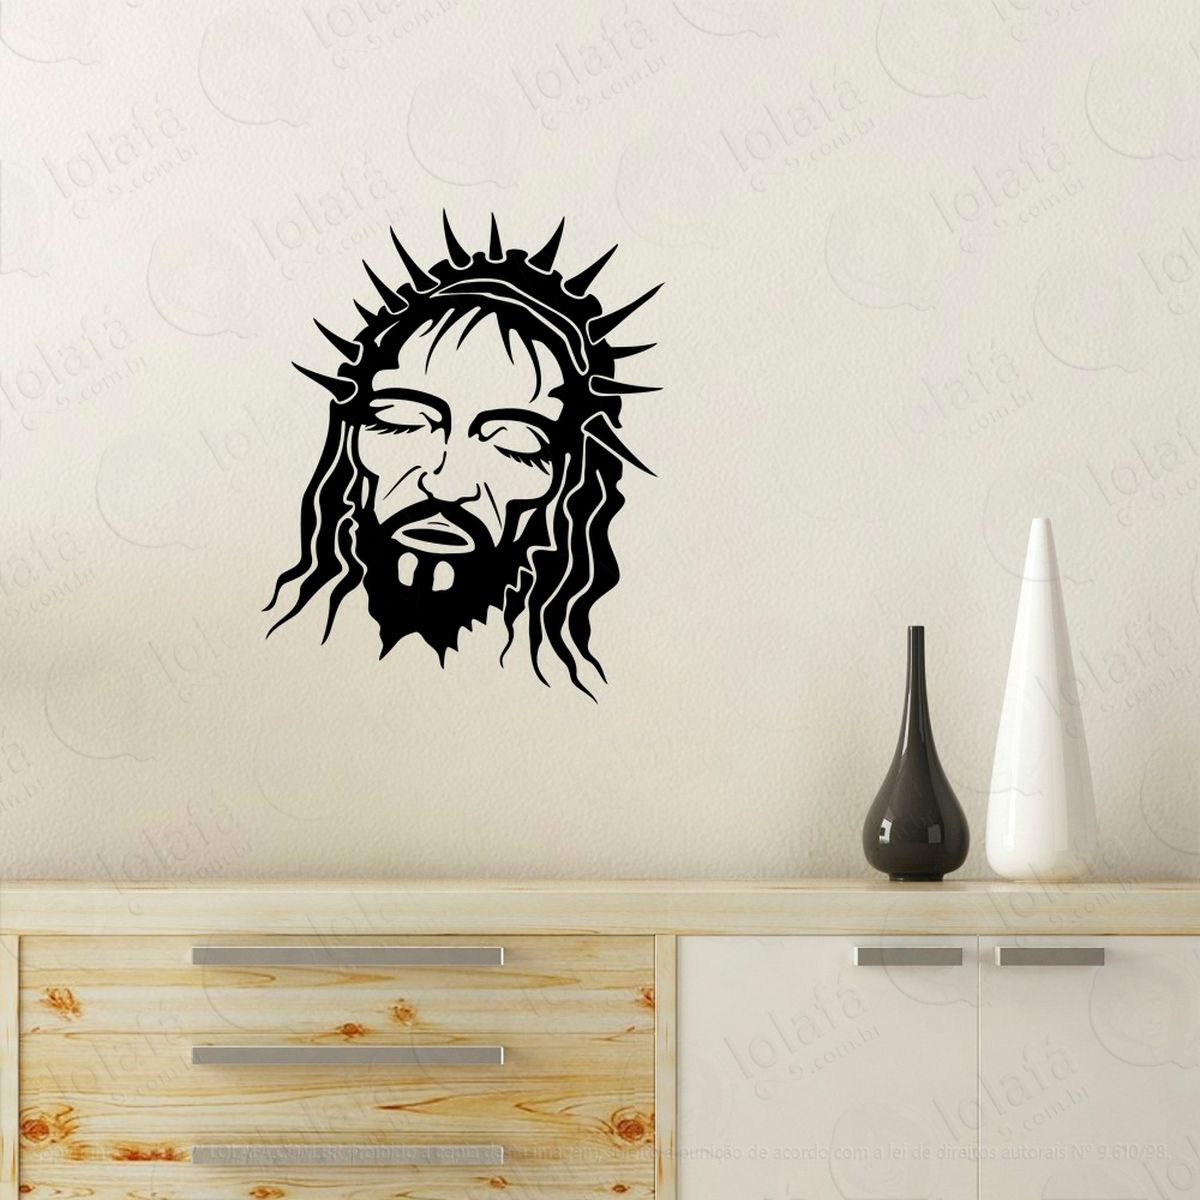 jesus cristo adesivo de parede decorativo para casa, quarto, sala e vidro - mod:5